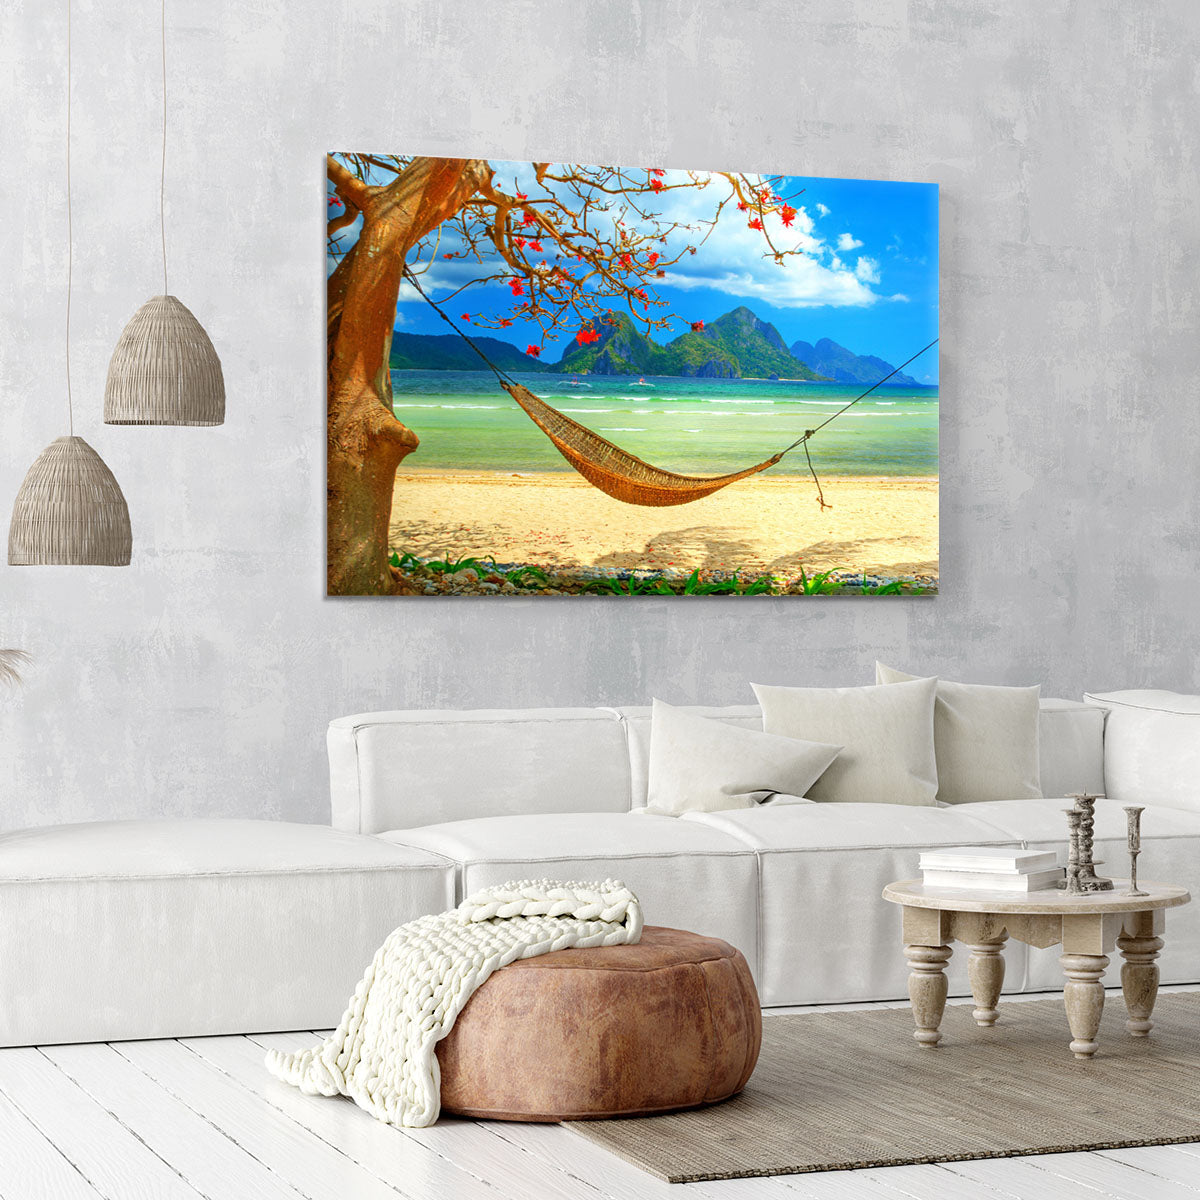 tropical beach scene with hammock Canvas Print or Poster - Canvas Art Rocks - 6